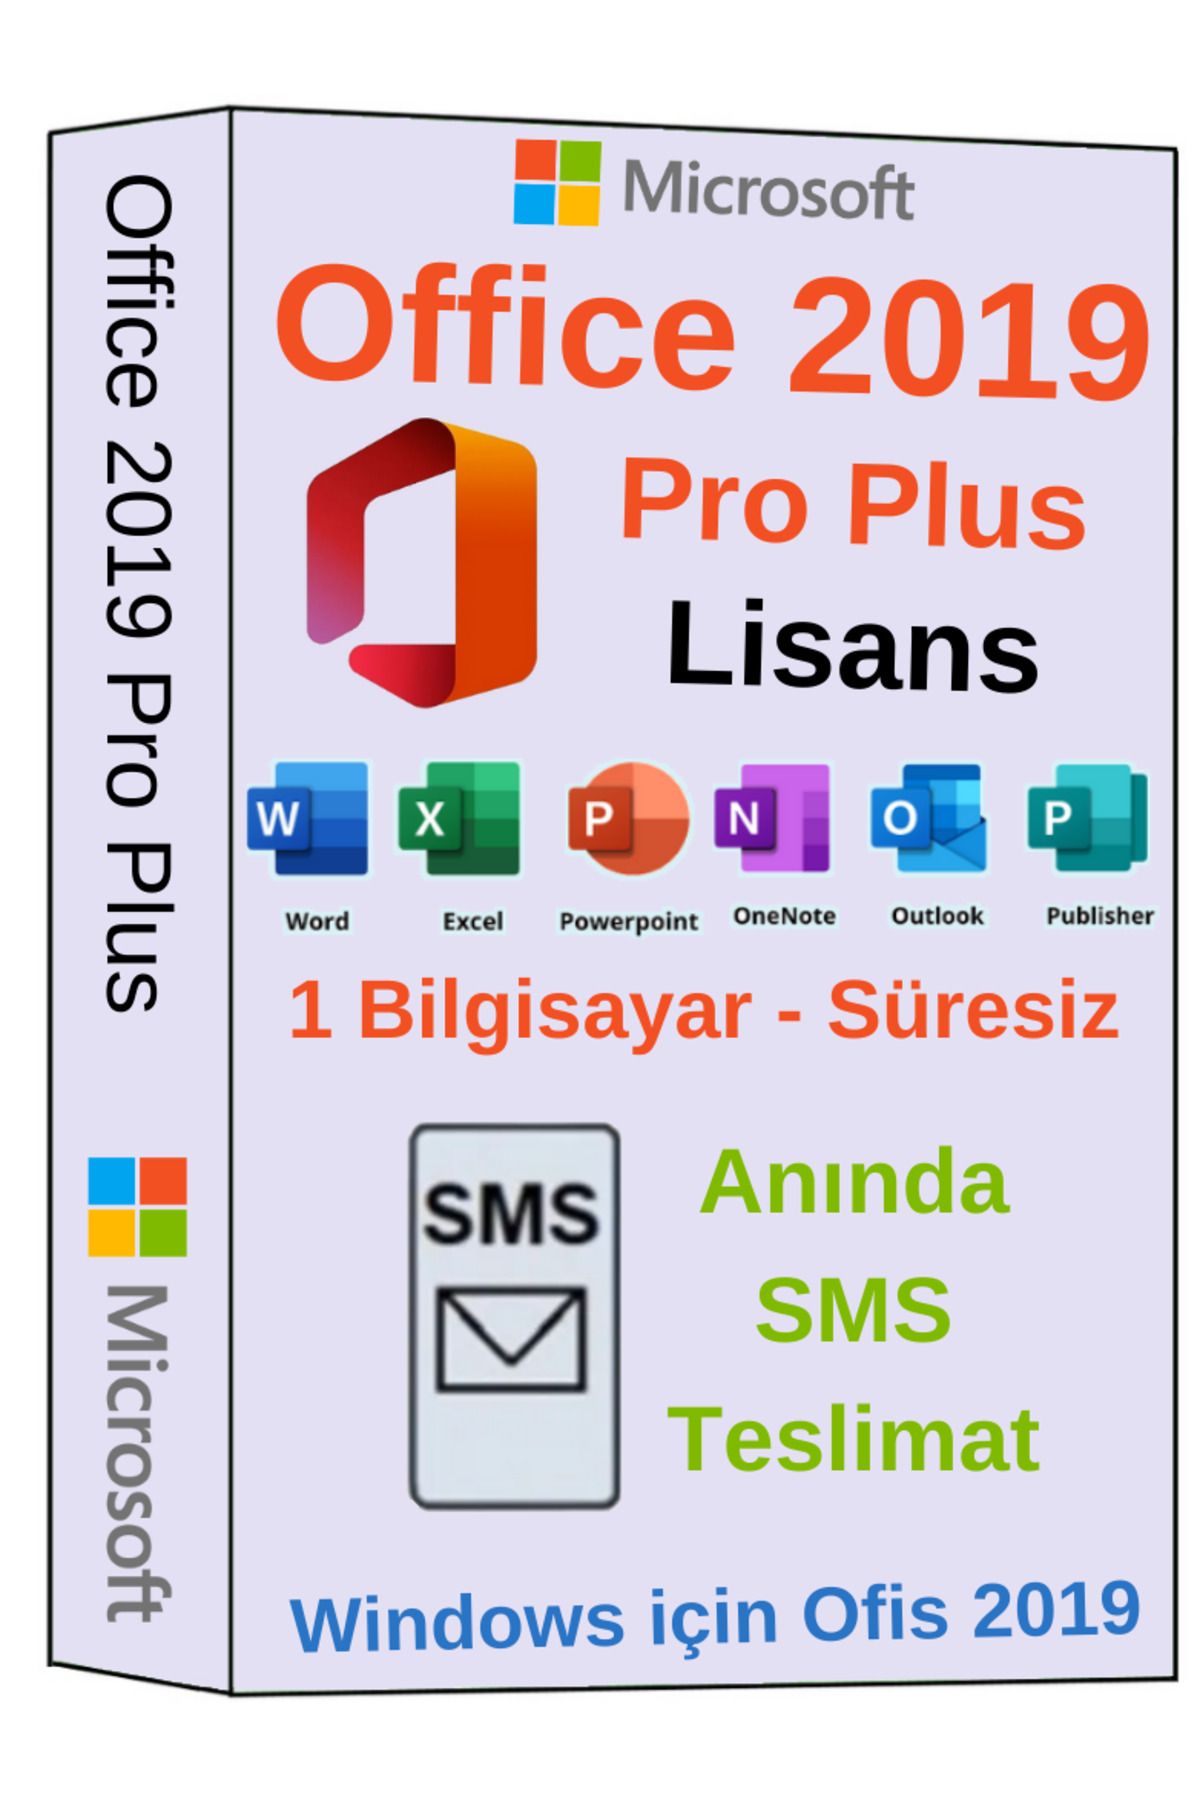 Microsoft Office 2019 Professional Plus Lisans - Süresiz - Windows - Sms Anında Teslim